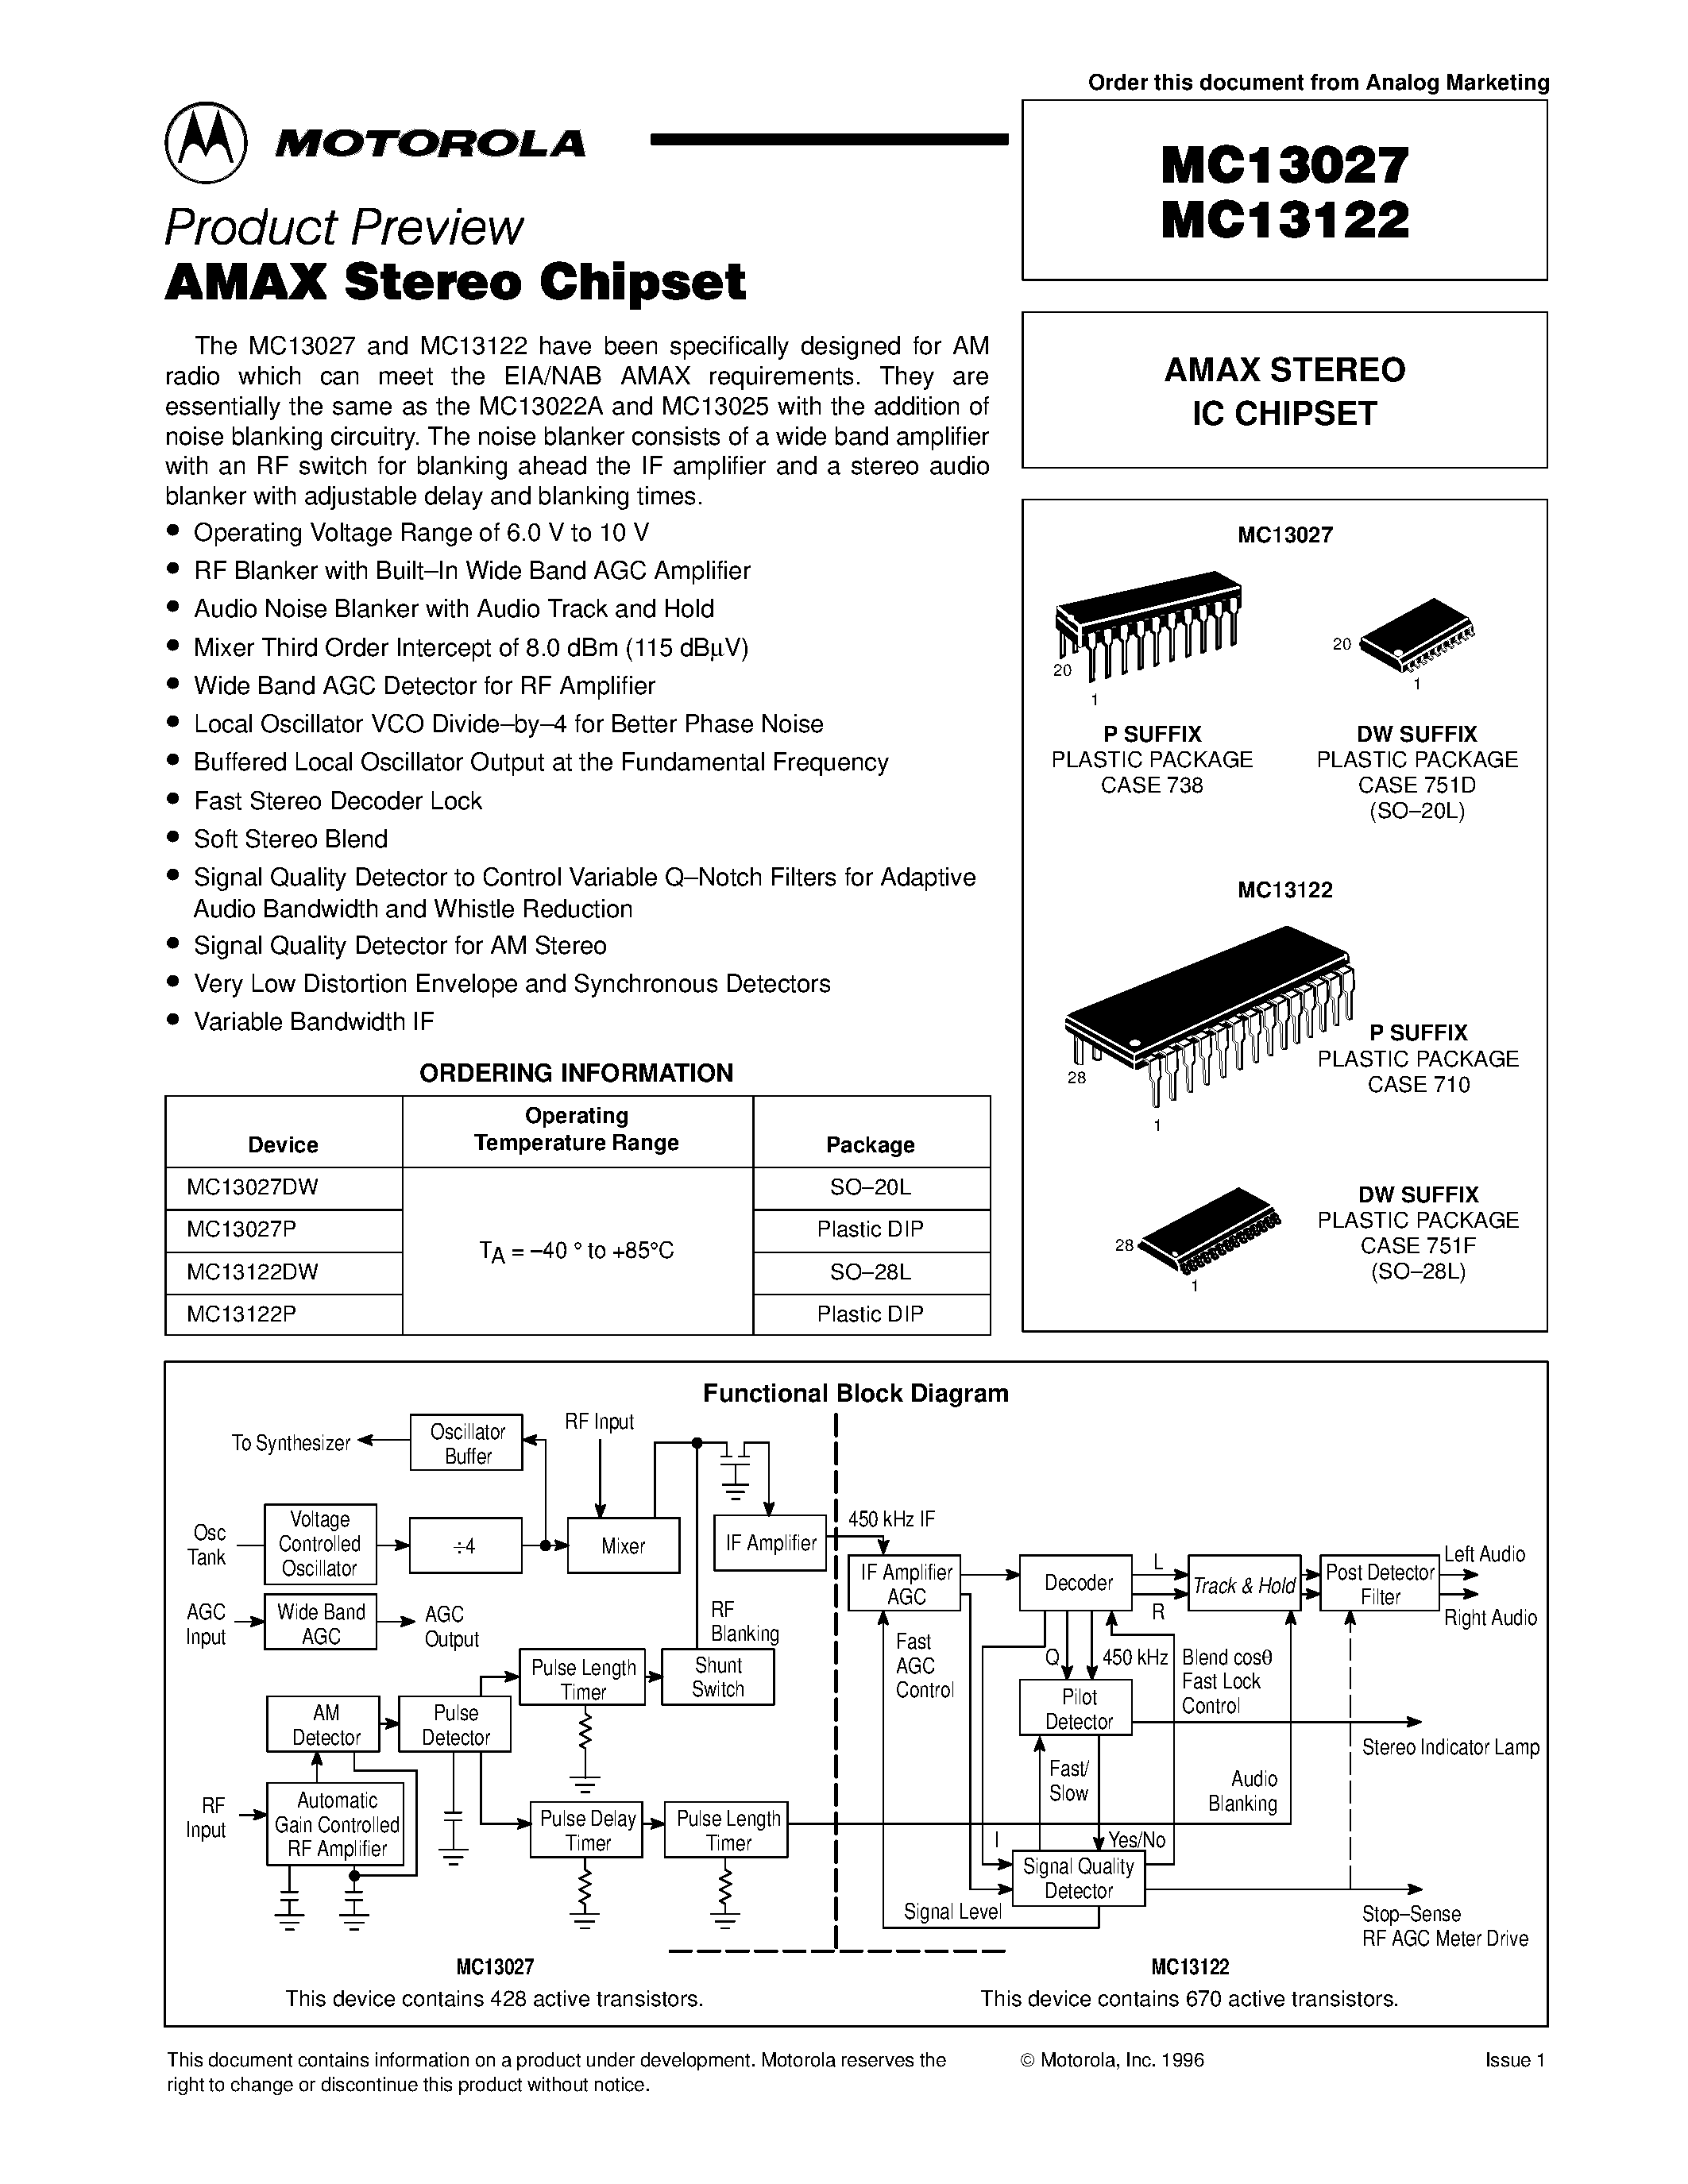 Datasheet MC13027P - AMAX STEREO IC CHIPSET page 1